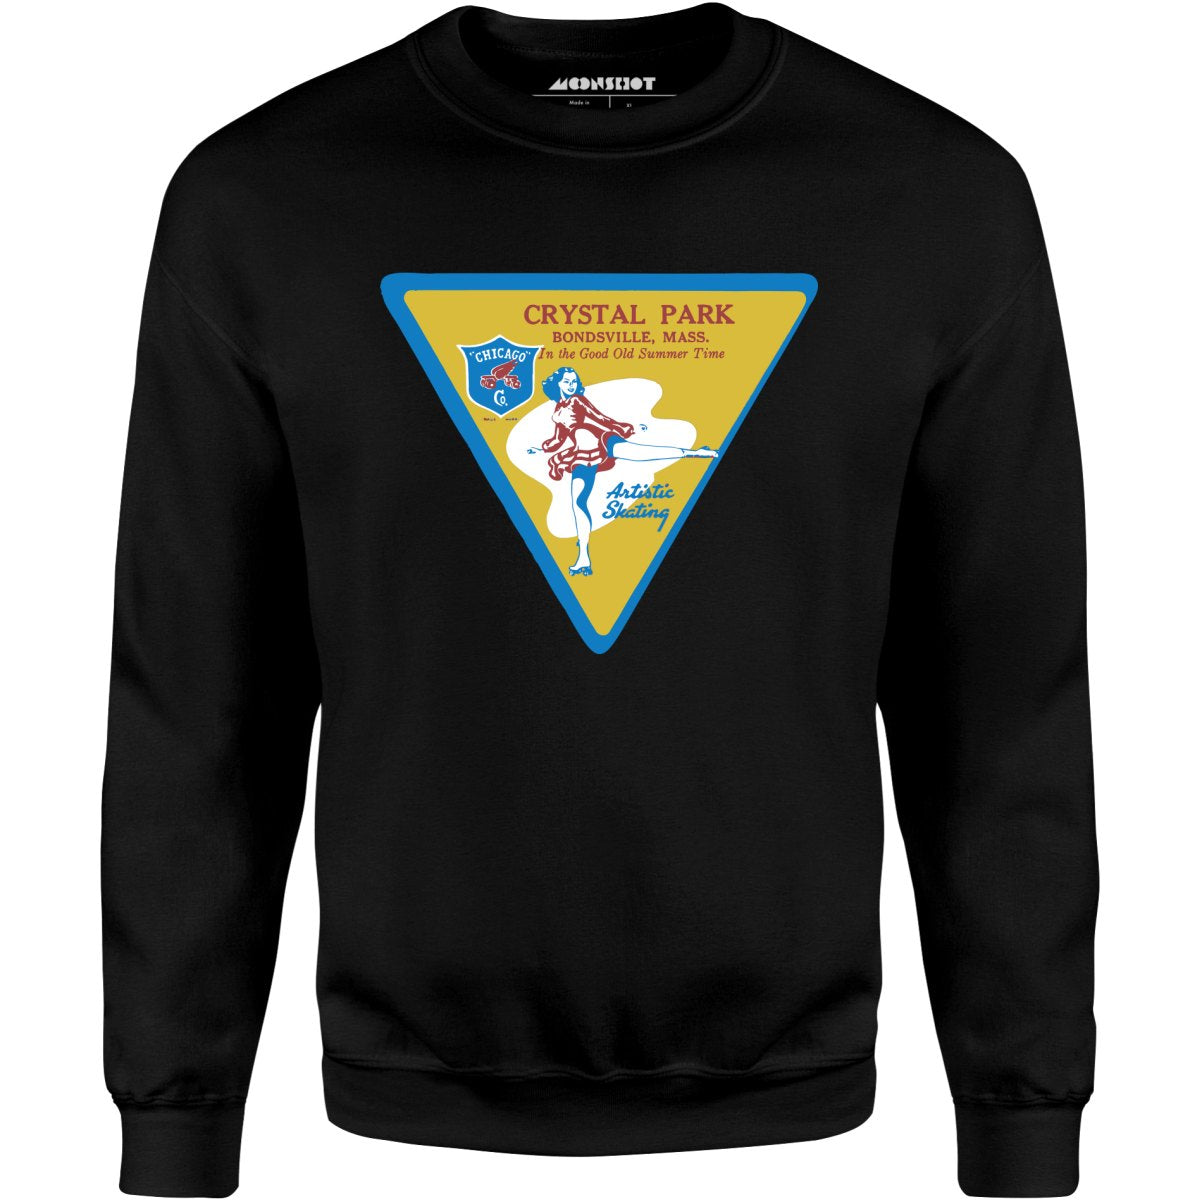 Crystal Park - Bondsville, MA - Vintage Roller Rink - Unisex Sweatshirt